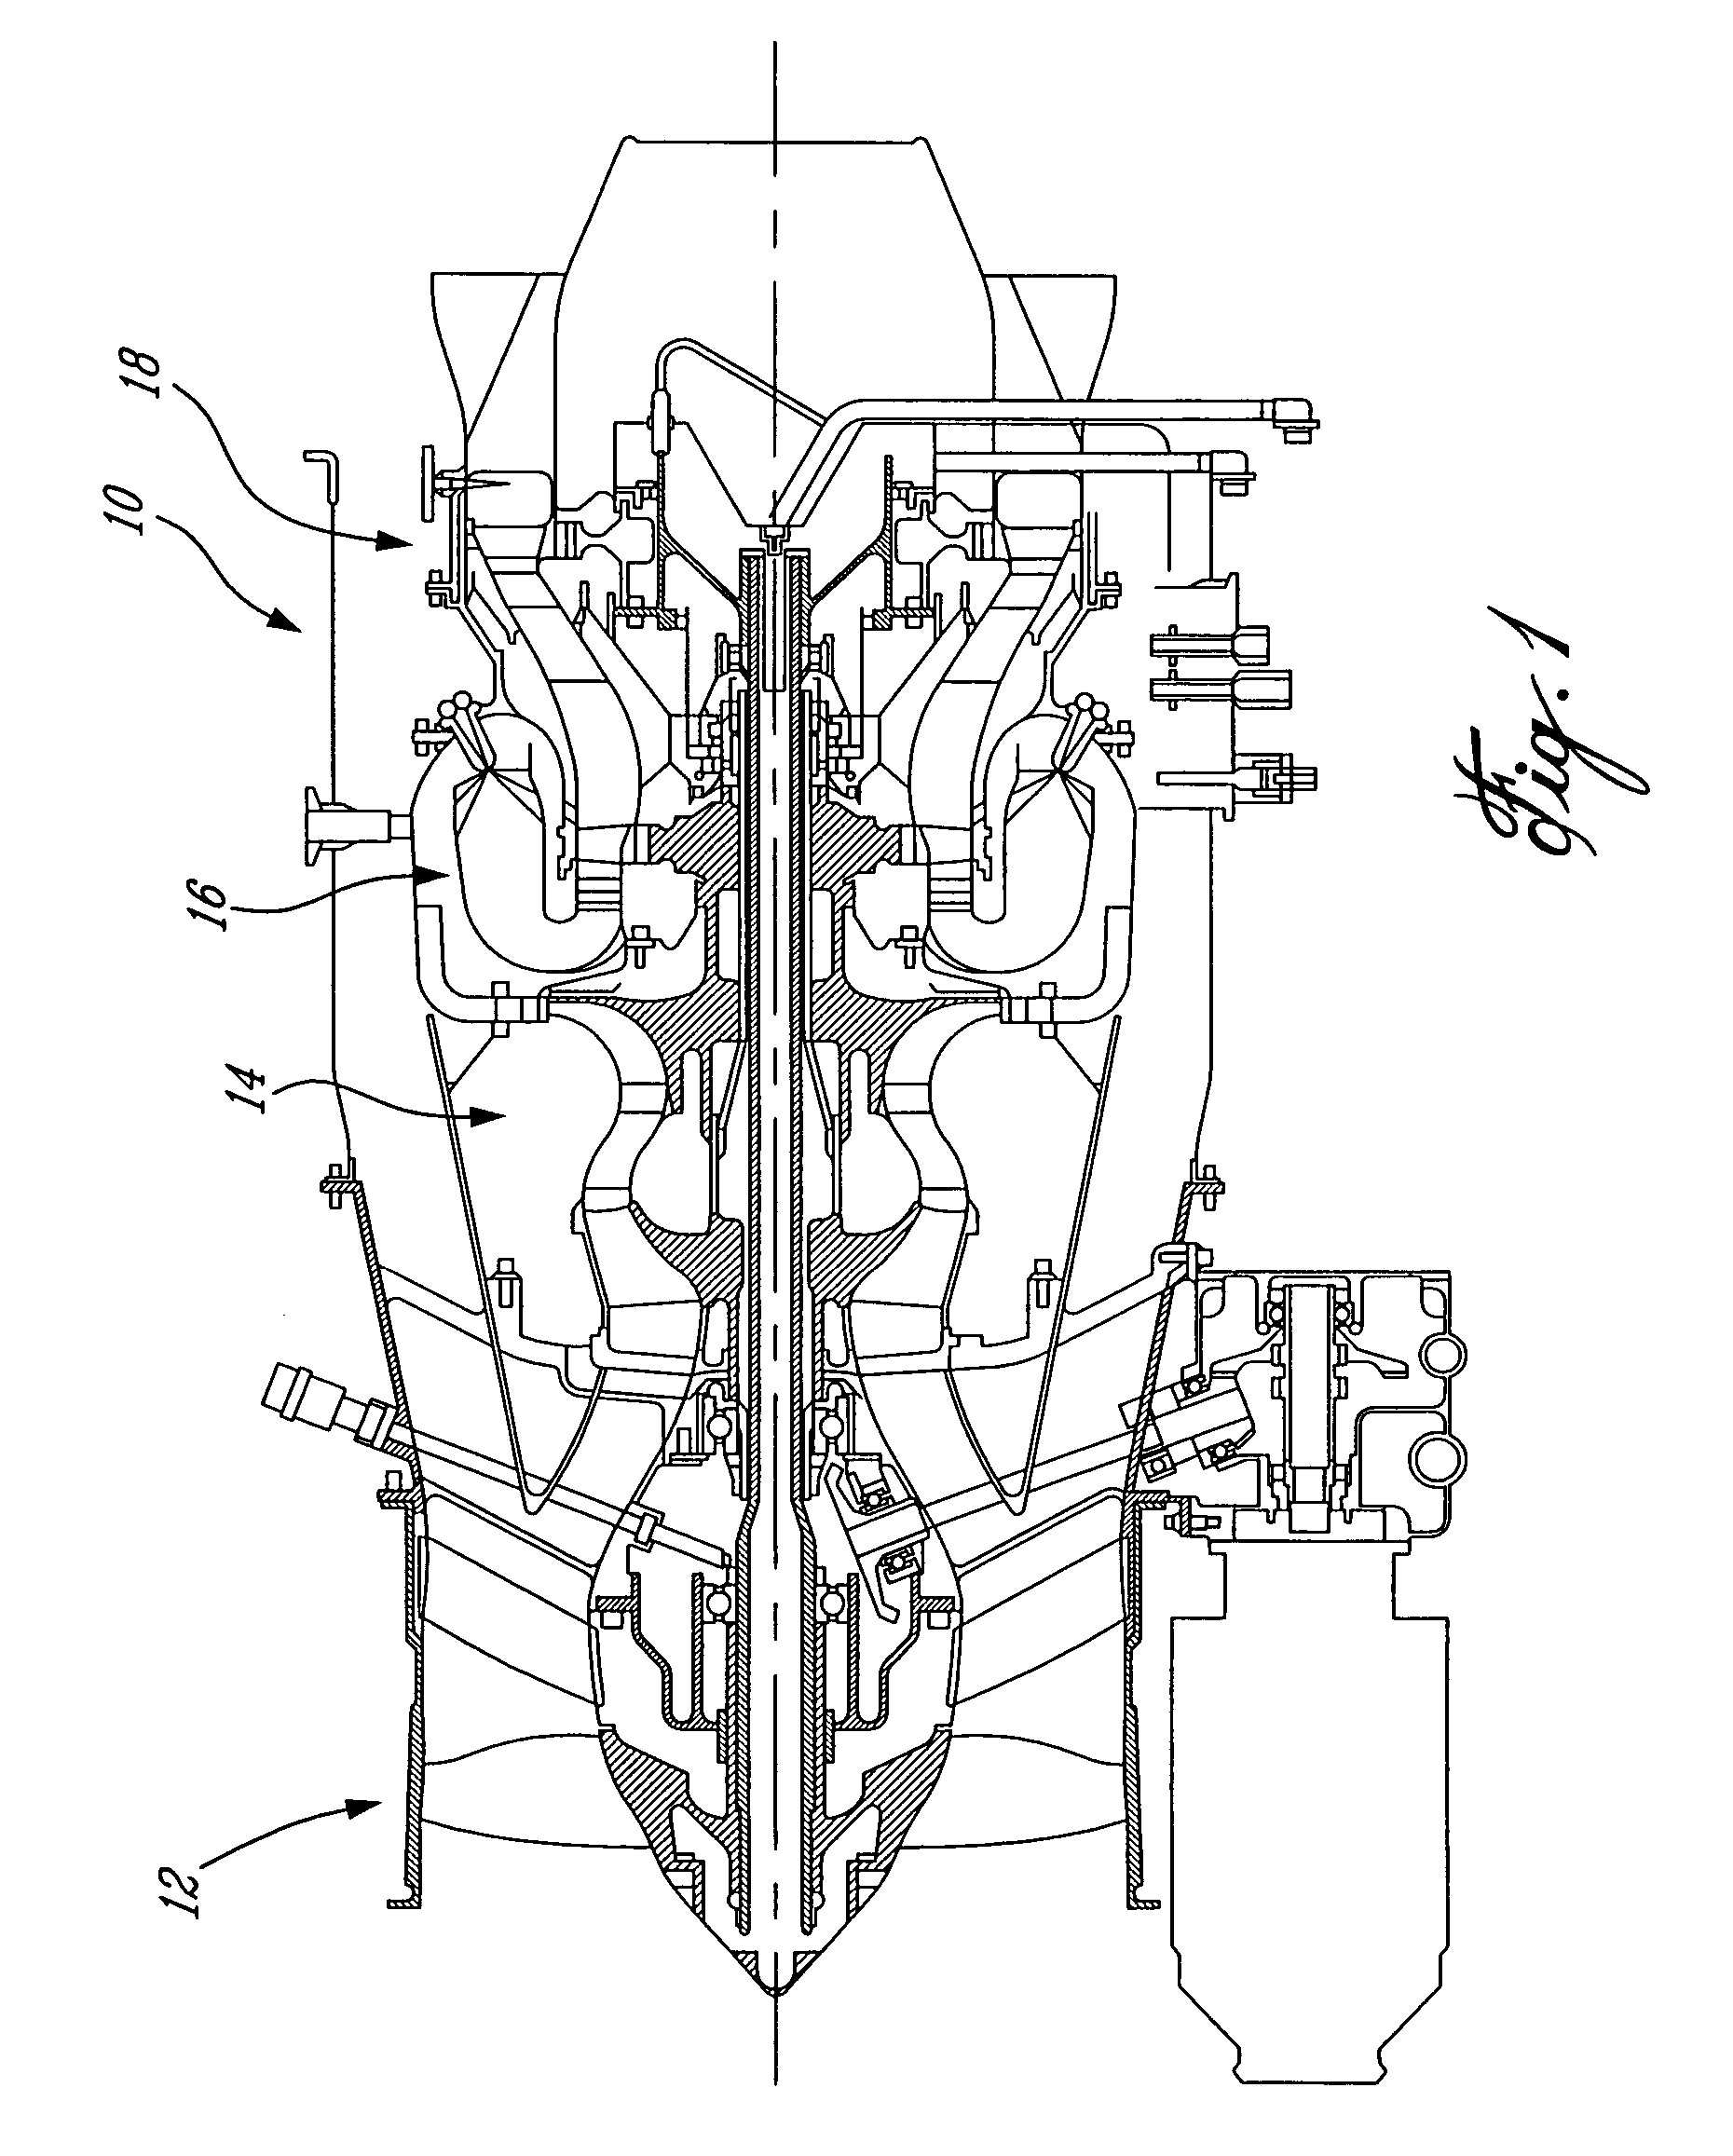 Gas turbine floating collar arrangement